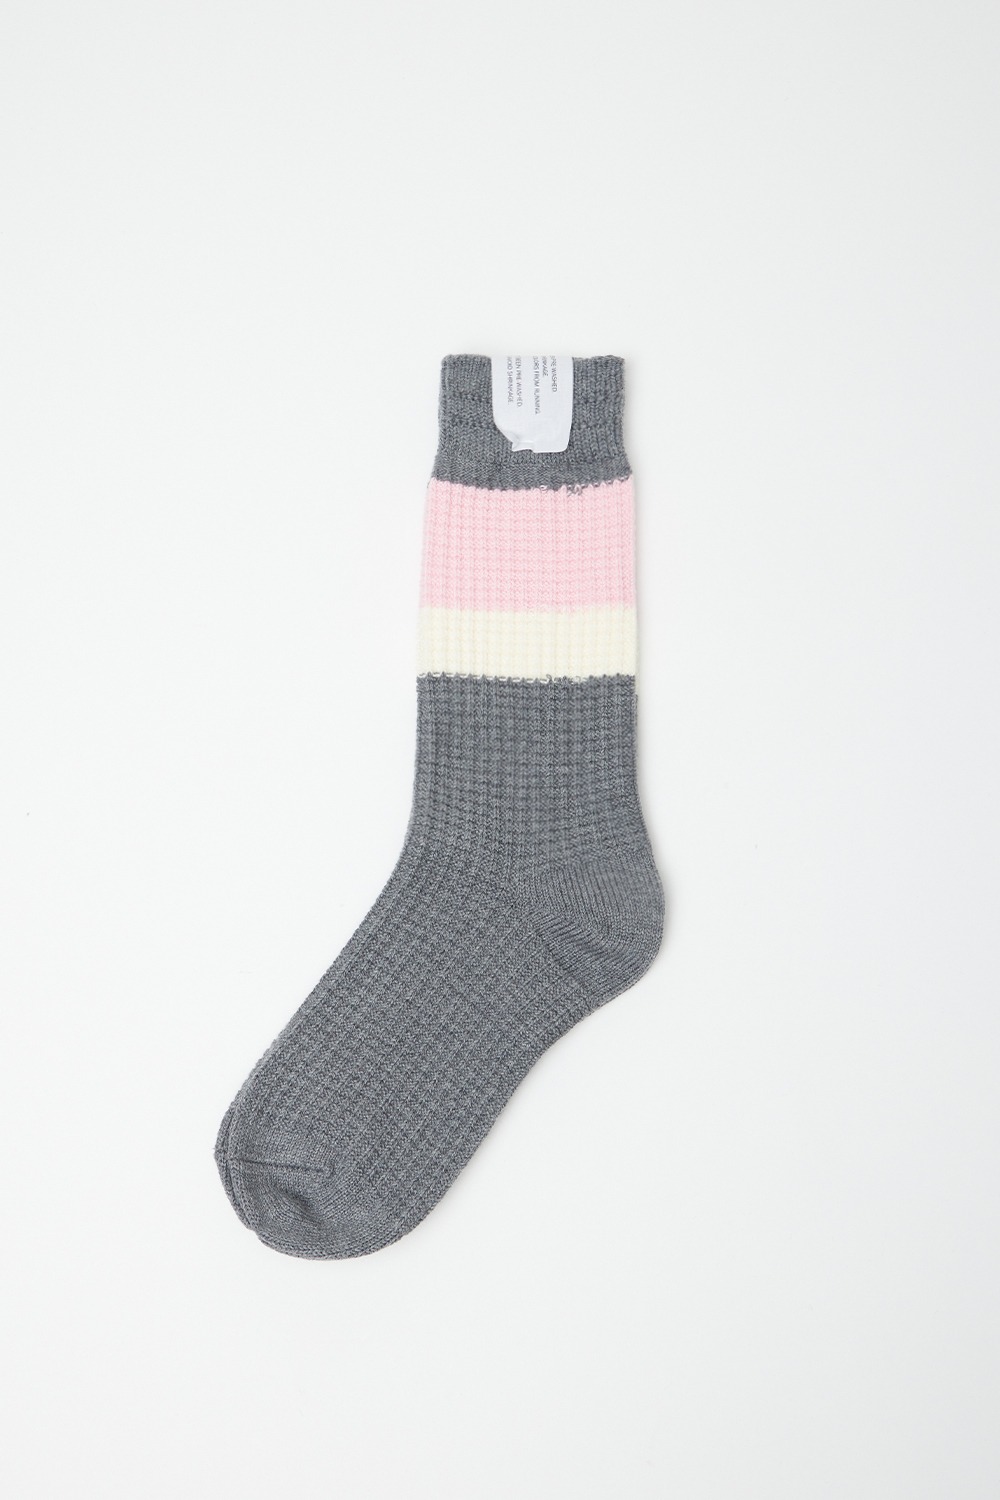 UH0596 Socks - Gray